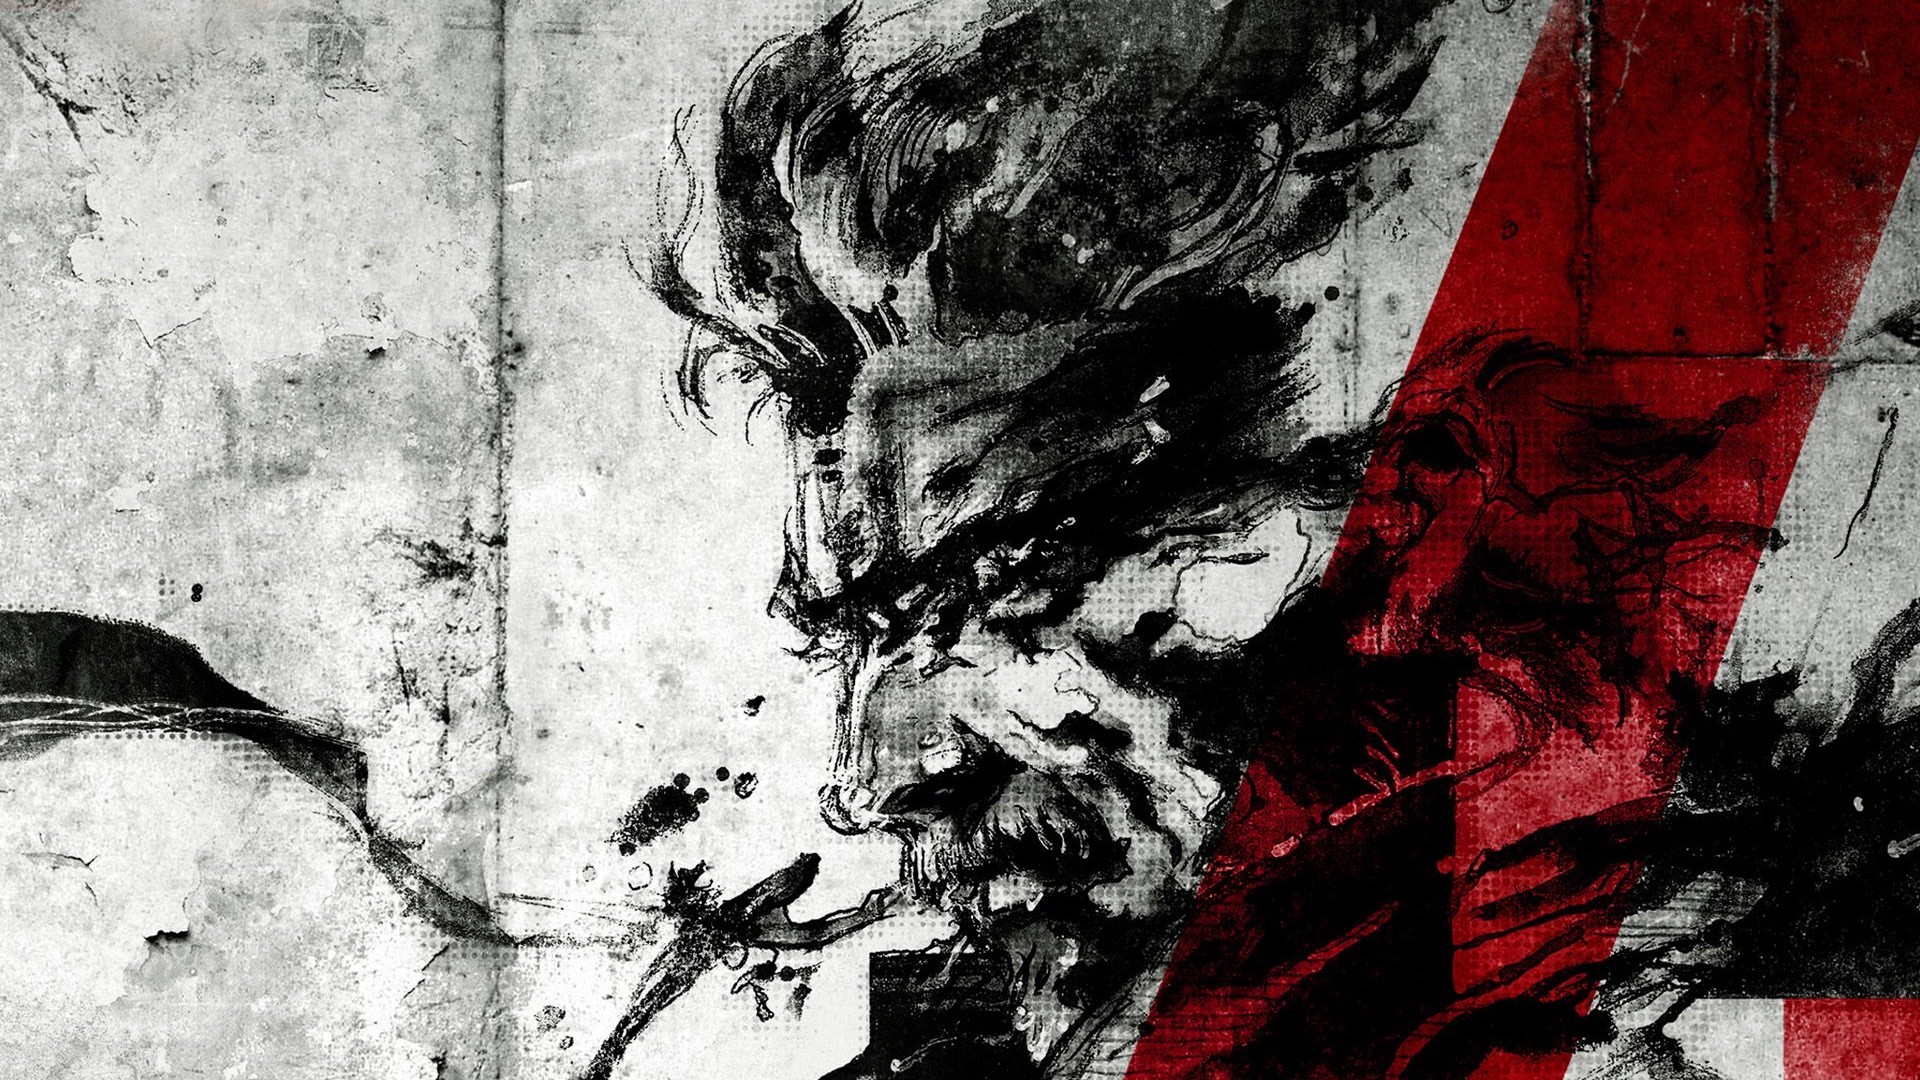 Metal Gear Solid 5 Wallpaper 1920×1080